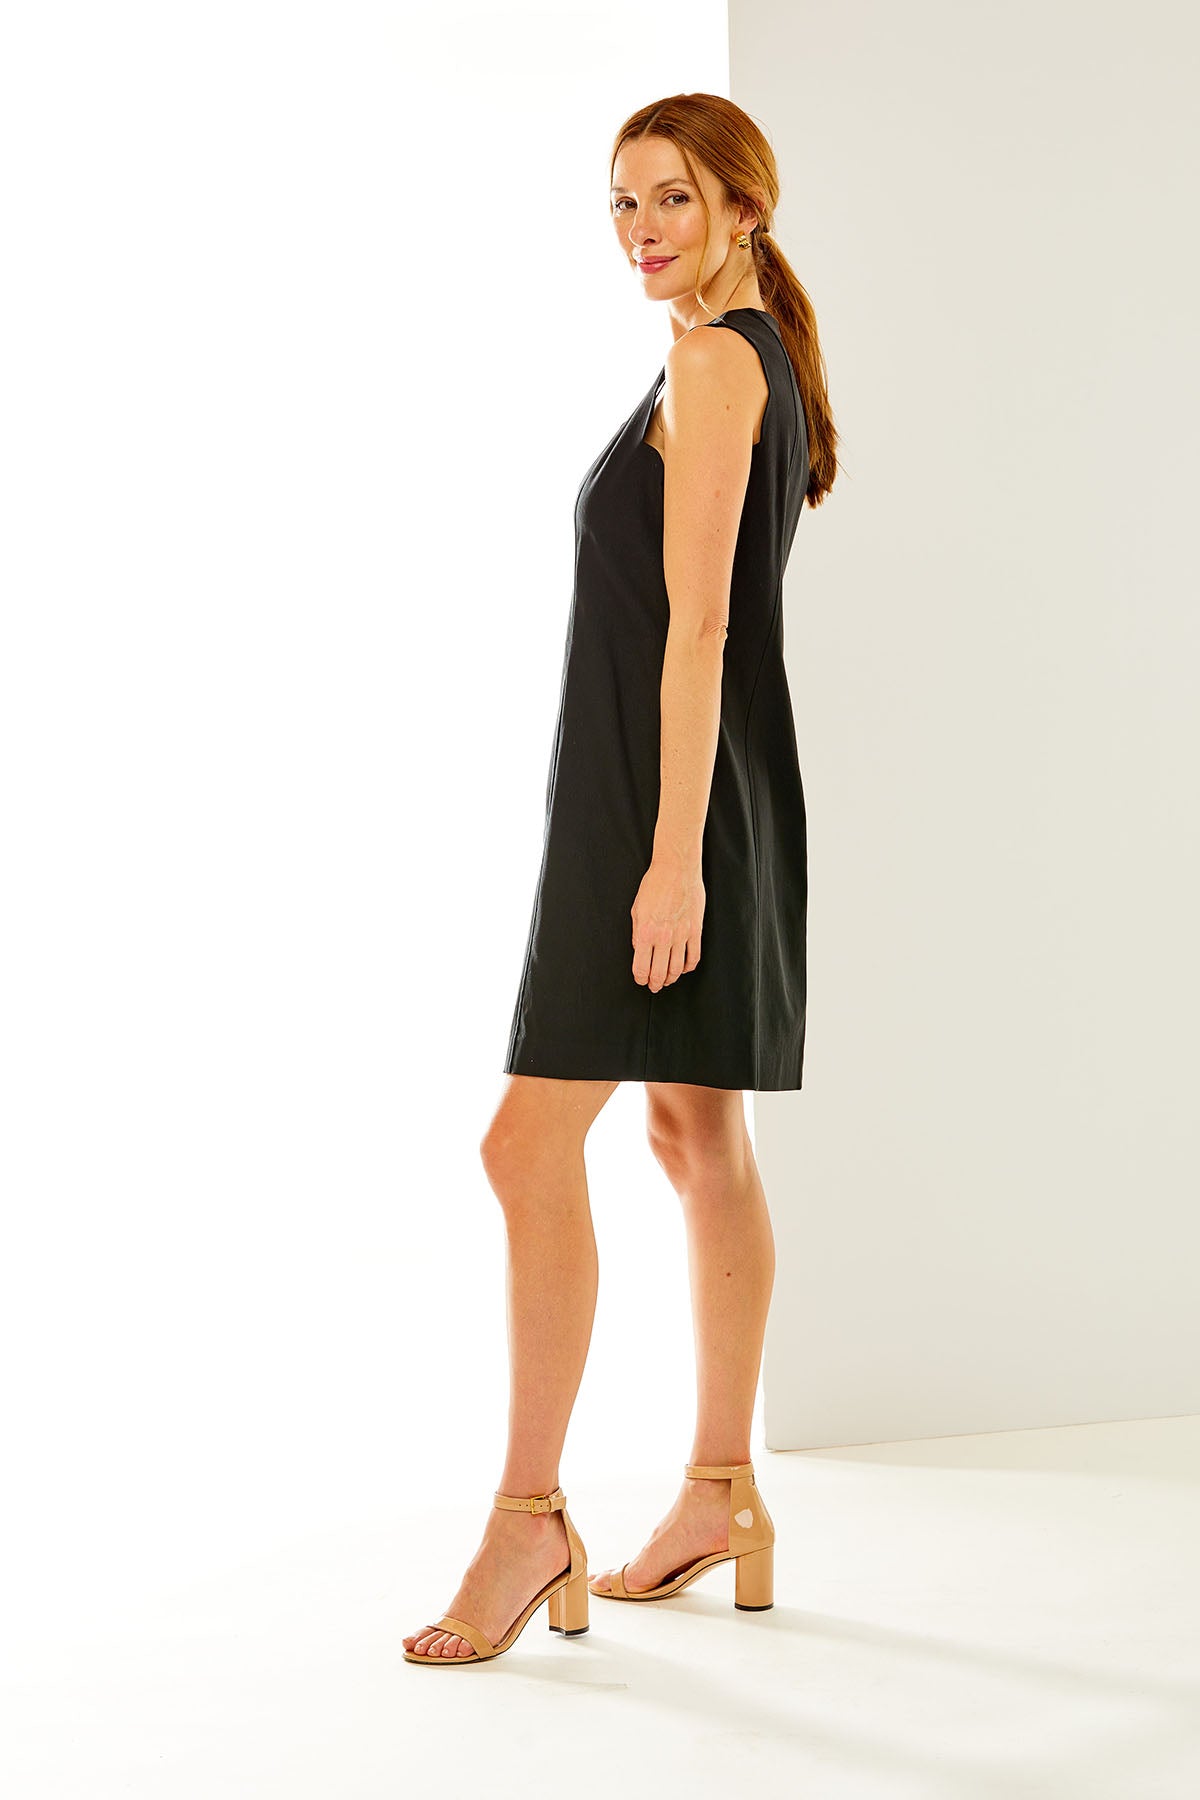 Woman in sleeveless black dress